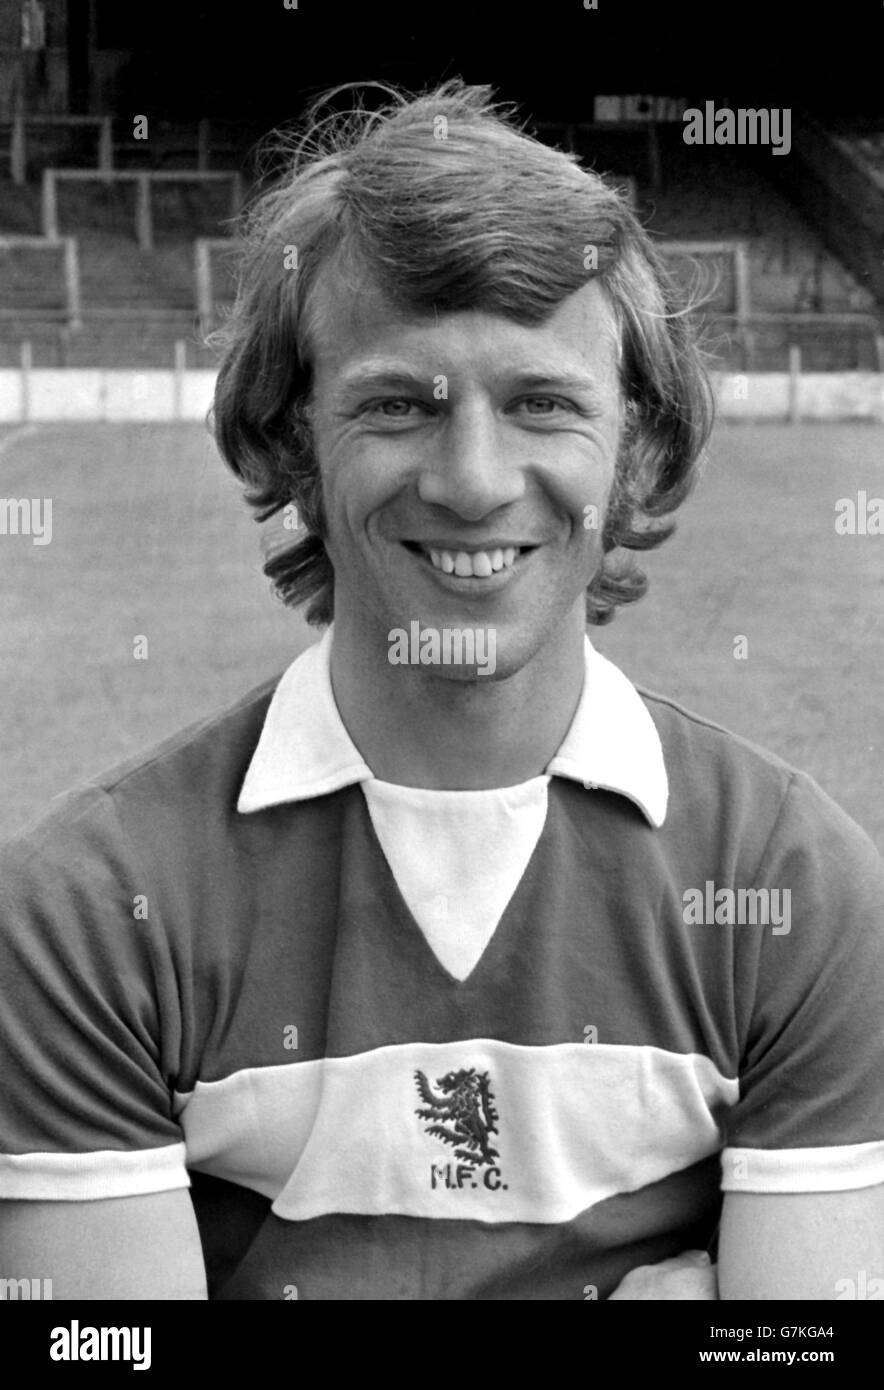 David Mills. Middlesbrough striker David Mills Stock Photo - Alamy